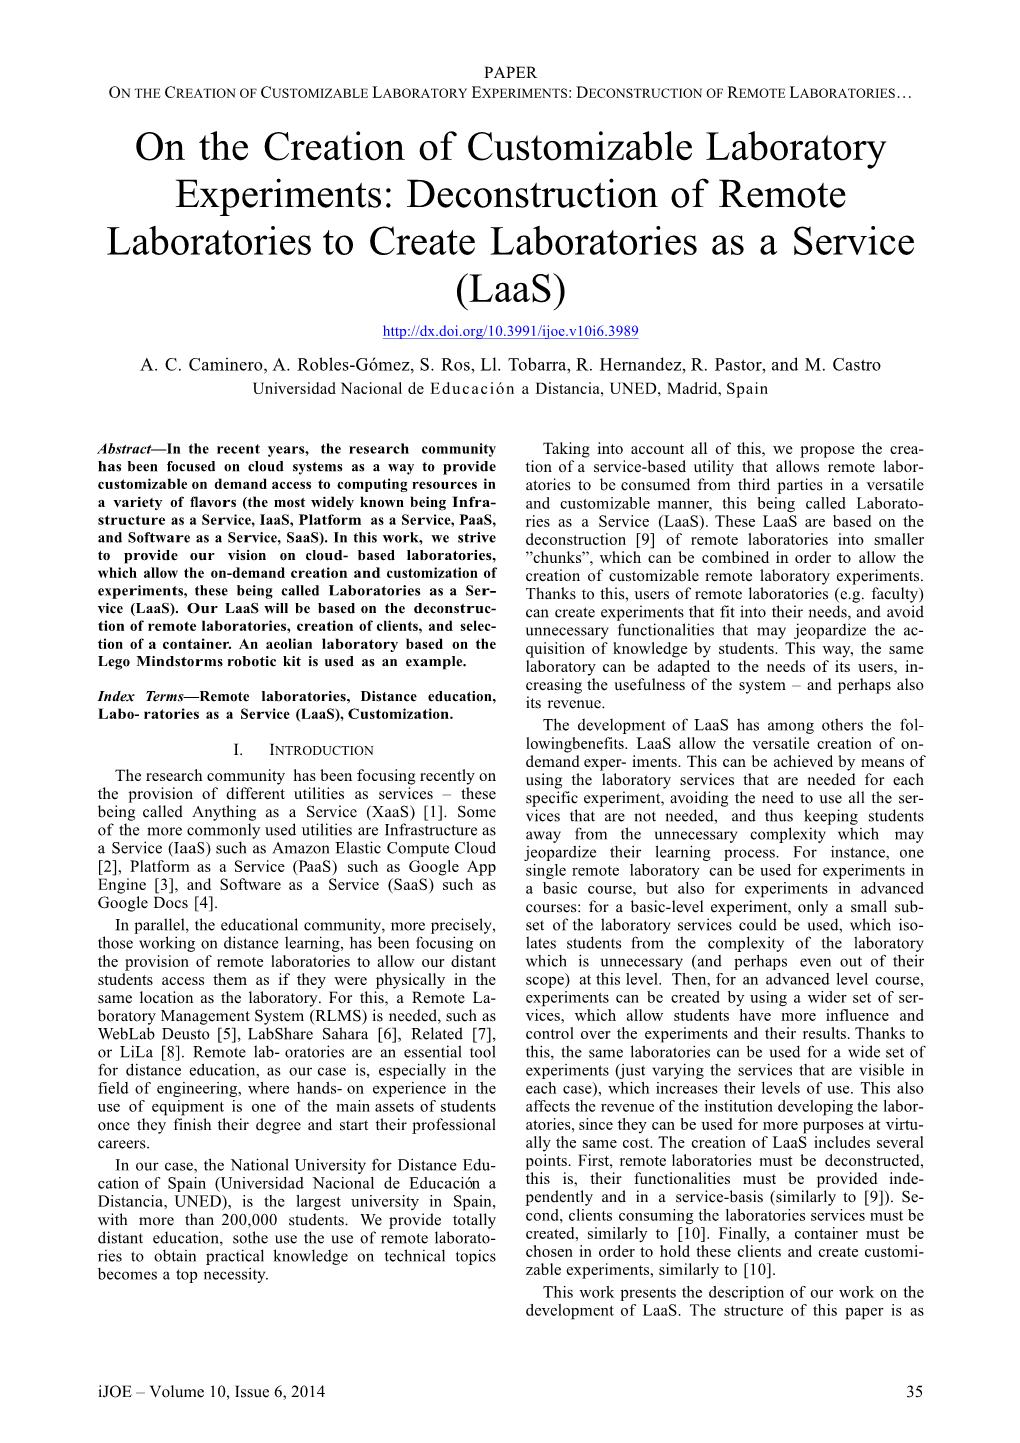 On the Creation of Customizable Laboratory